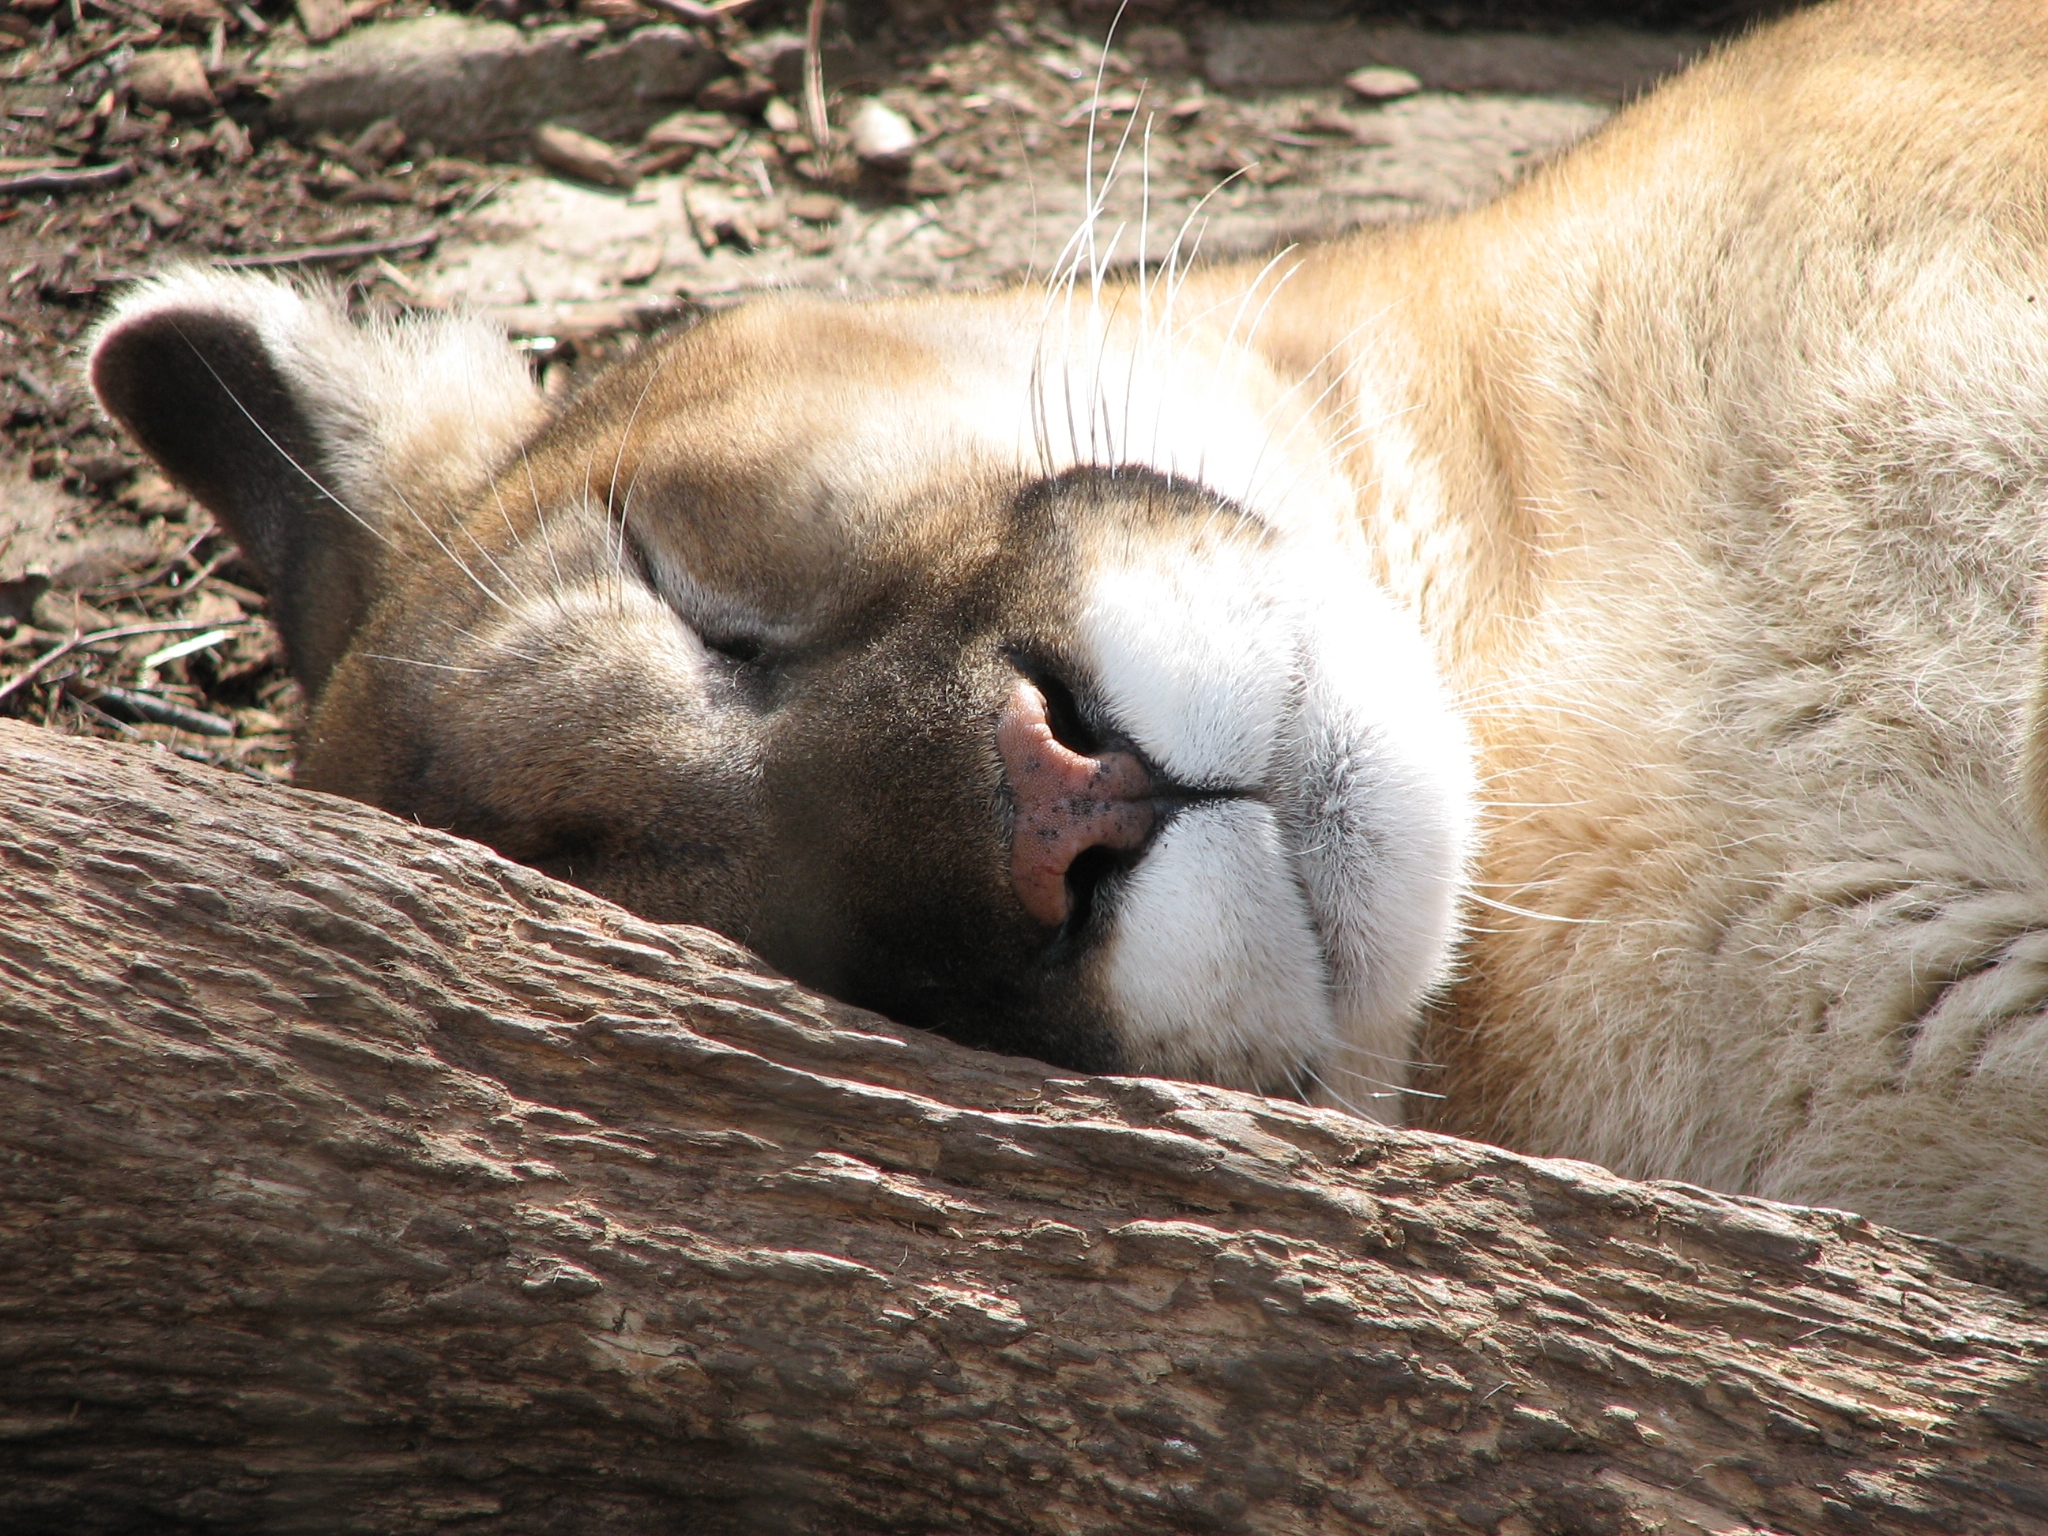 File:Puma Sleeping.jpg - Wikimedia Commons